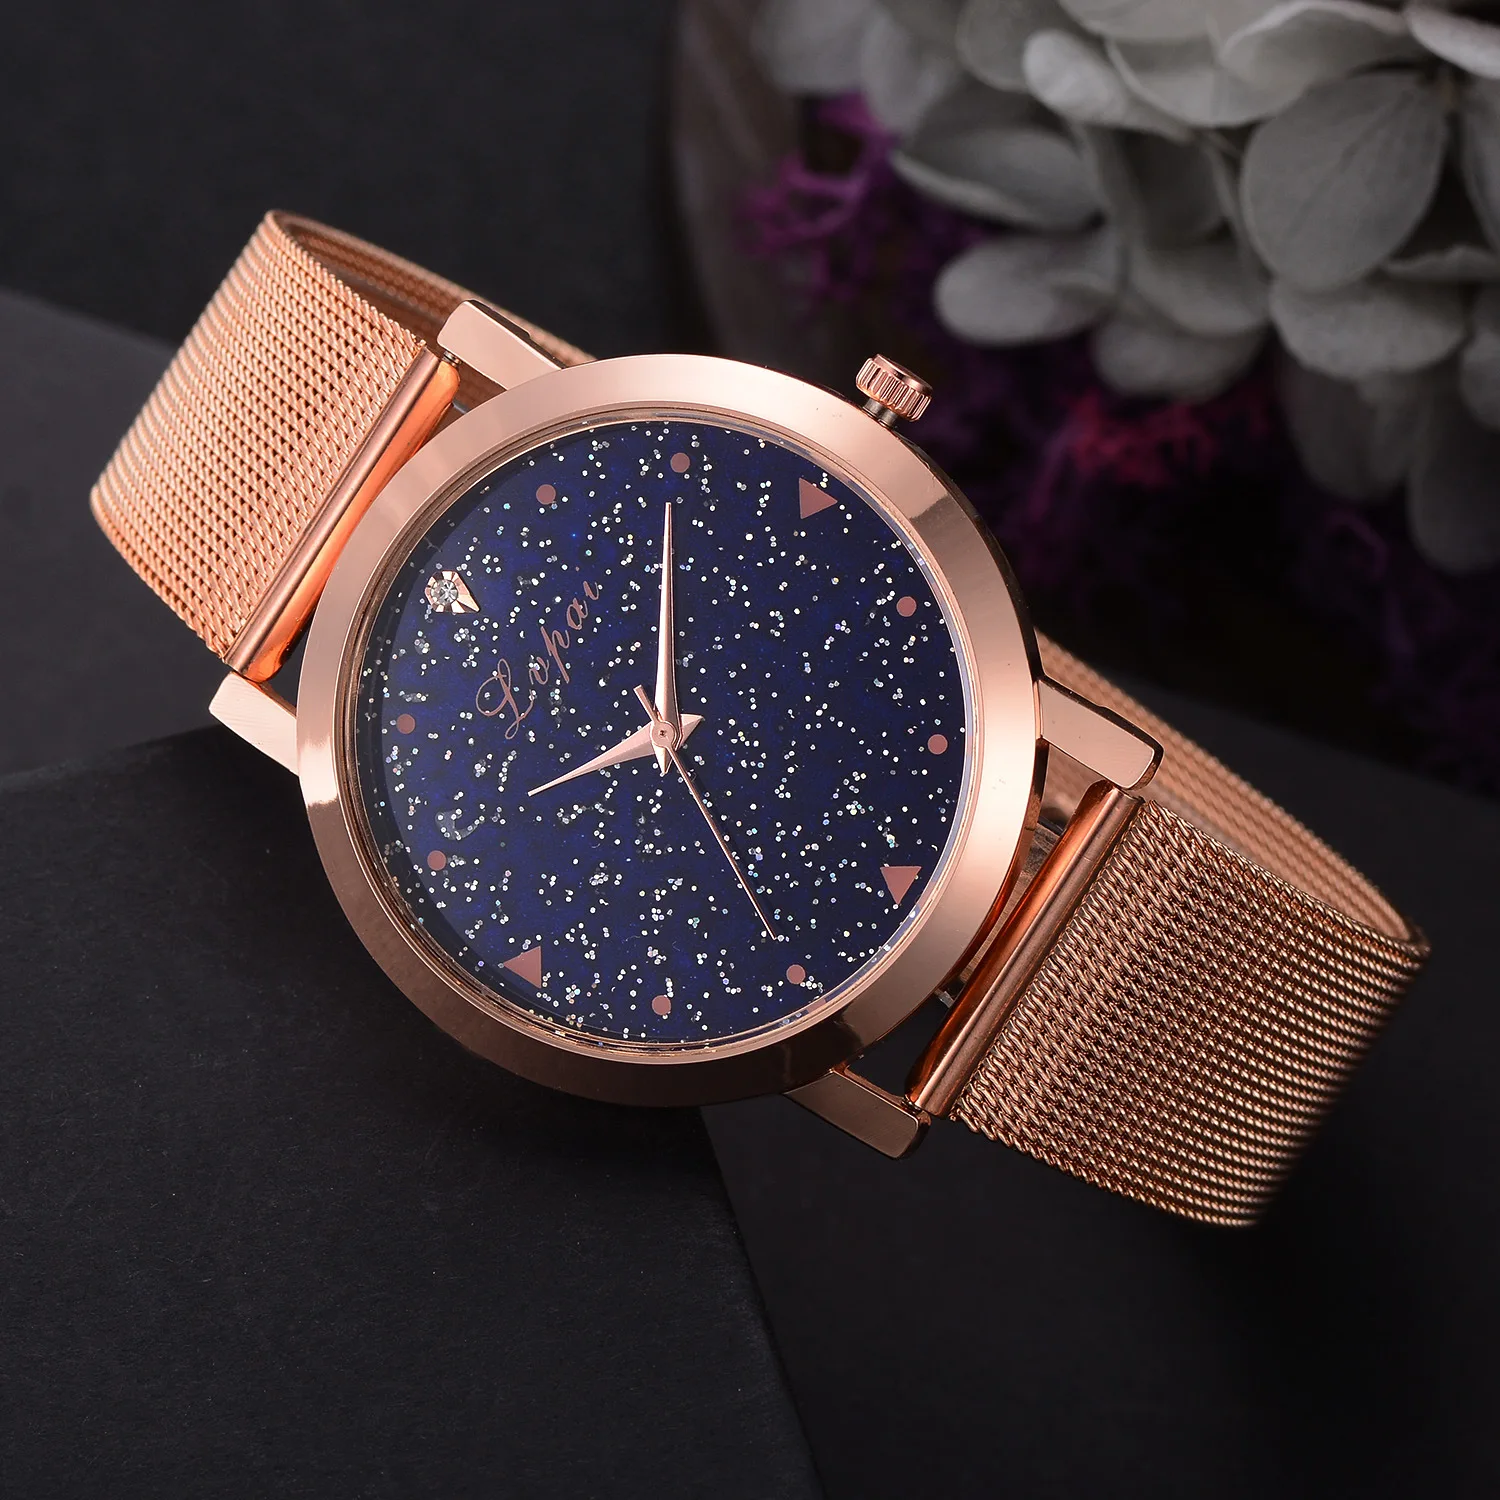 Reloj mujer 2020 Fashion Big Dial Starry Sky Women ' s Luxury Watches Rose Gold Mesh Band Analogowy zegarek kwarcowy zegarek Damski